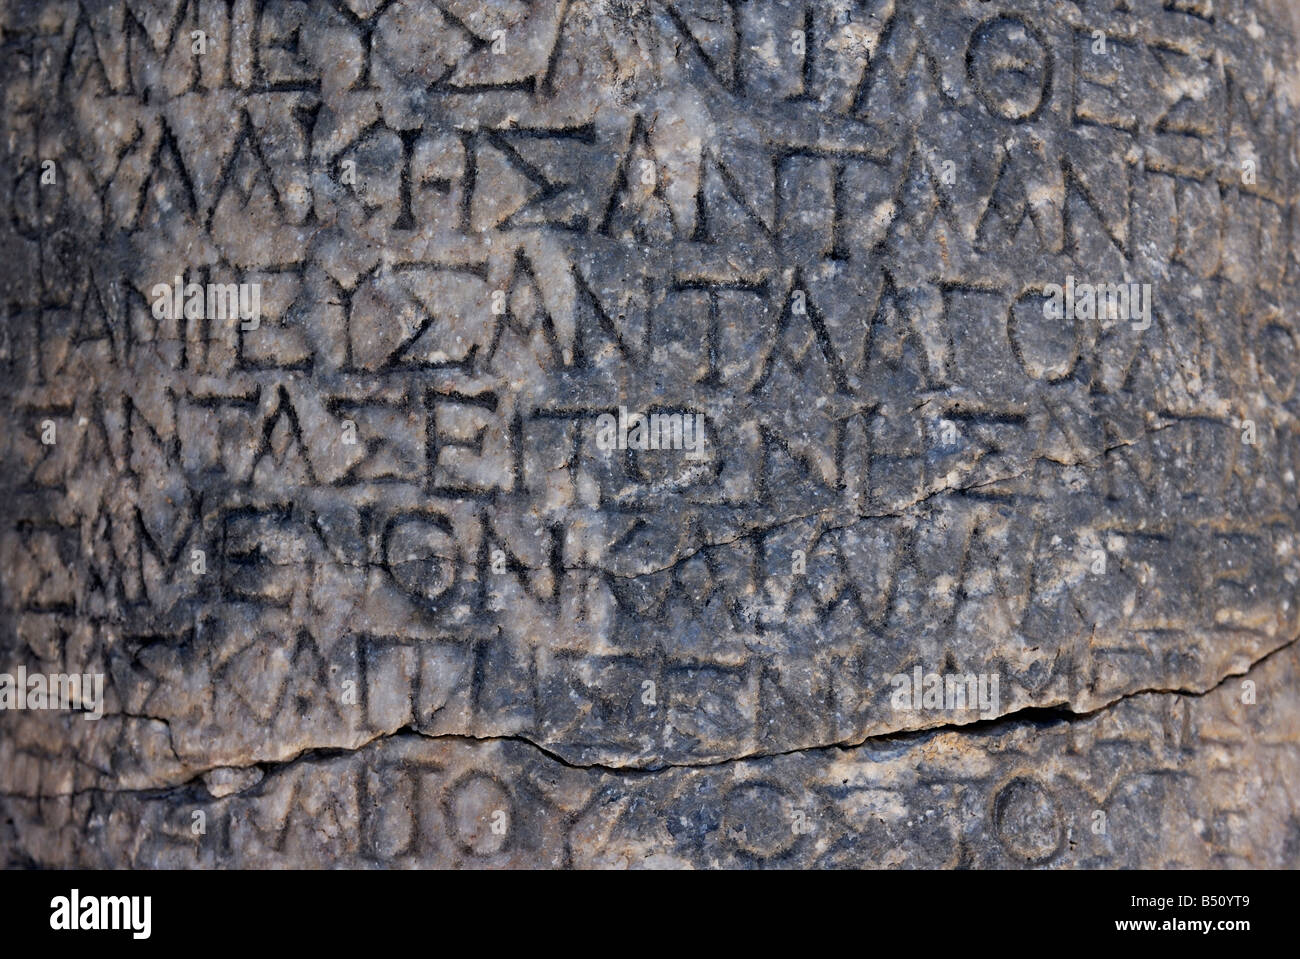 Ancient Greek manuscript in stone Stock Photo - Alamy